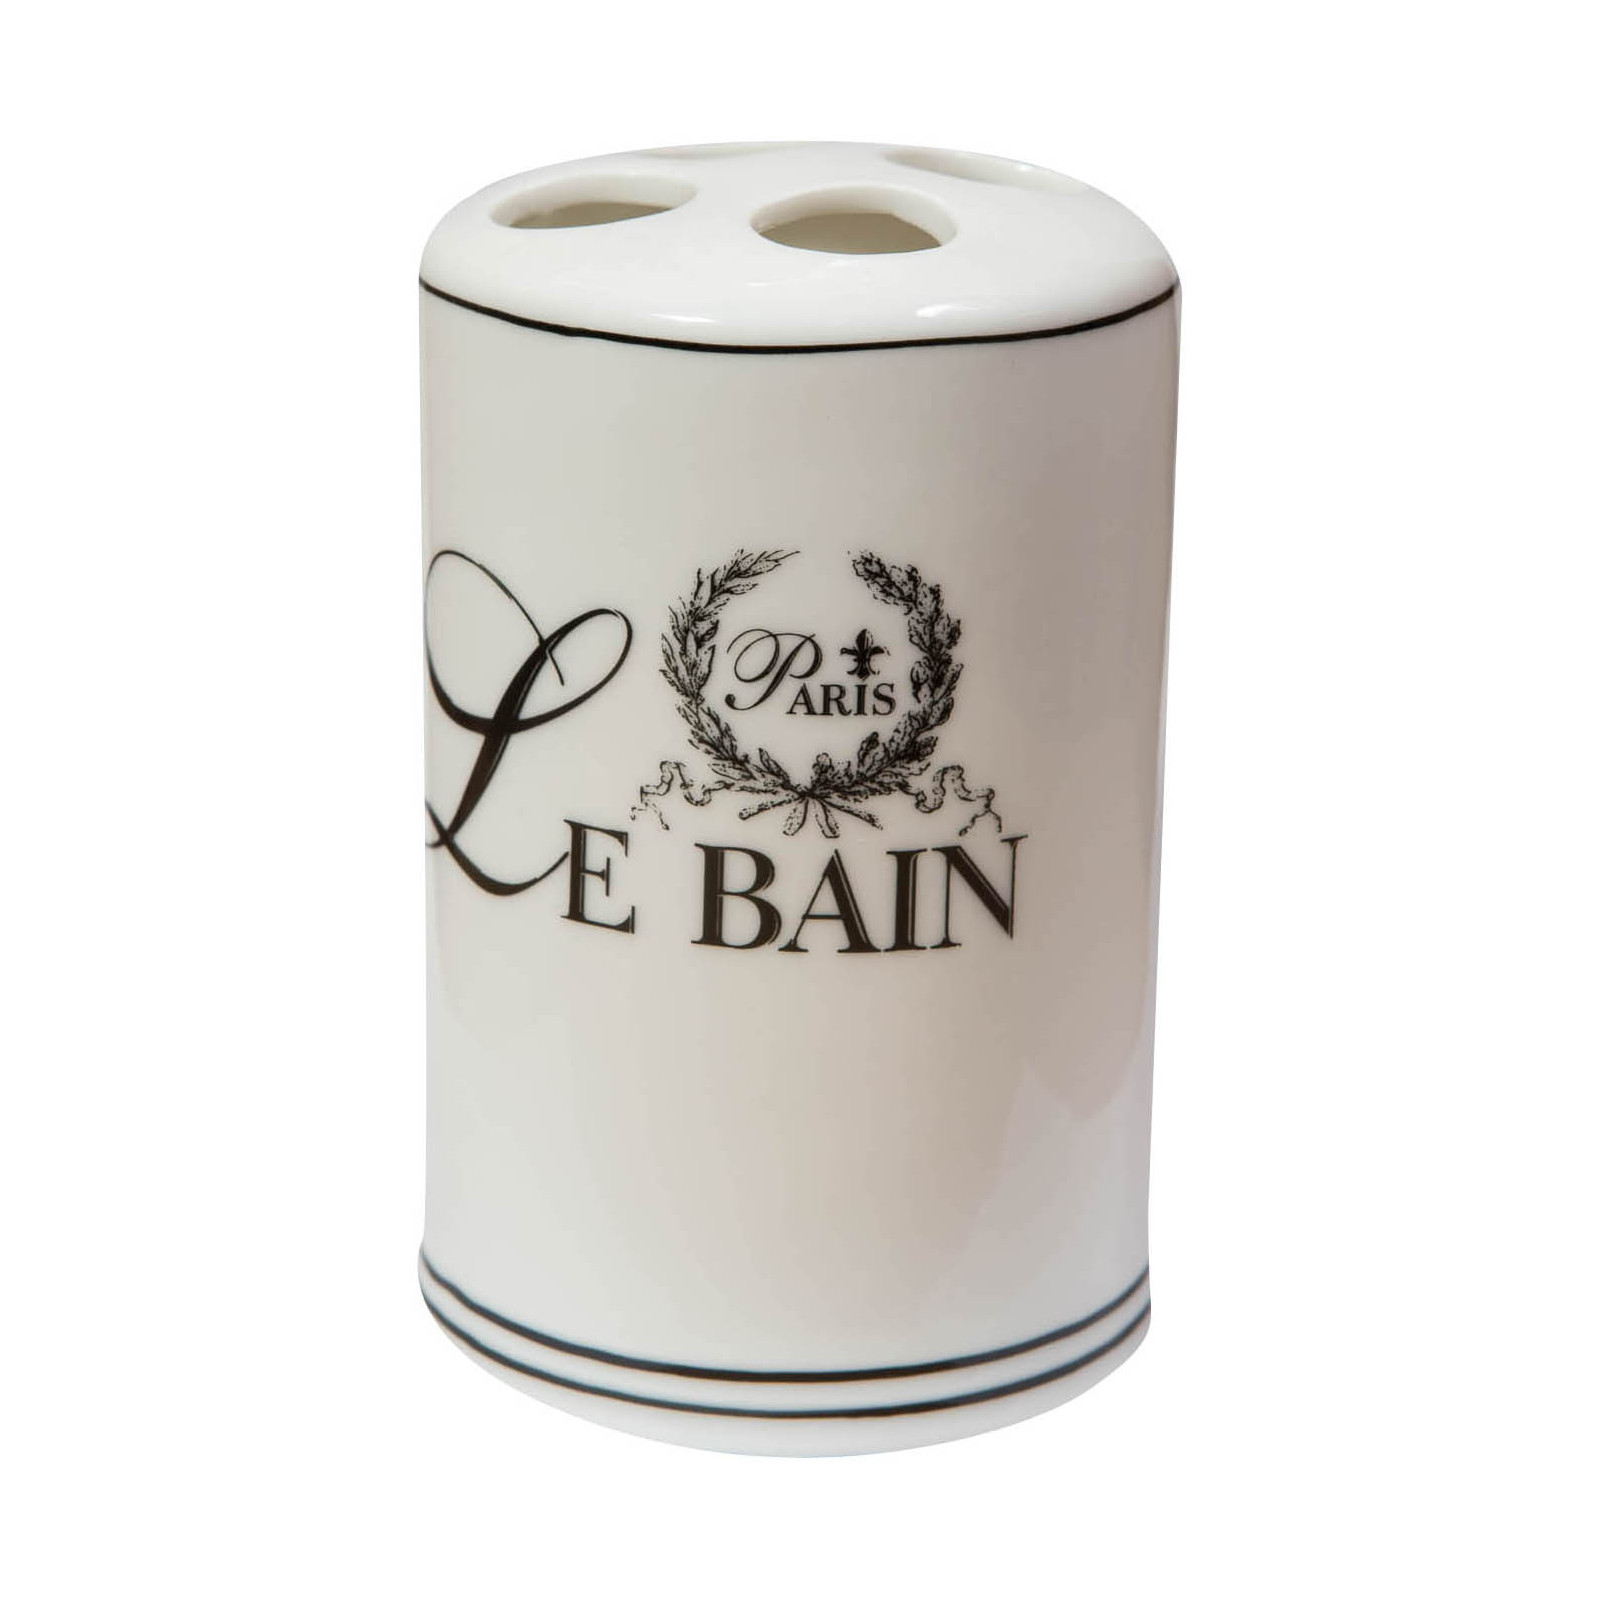 Set bagno Le Bain Paris 4 pezzi in porcellana bianca decorata 